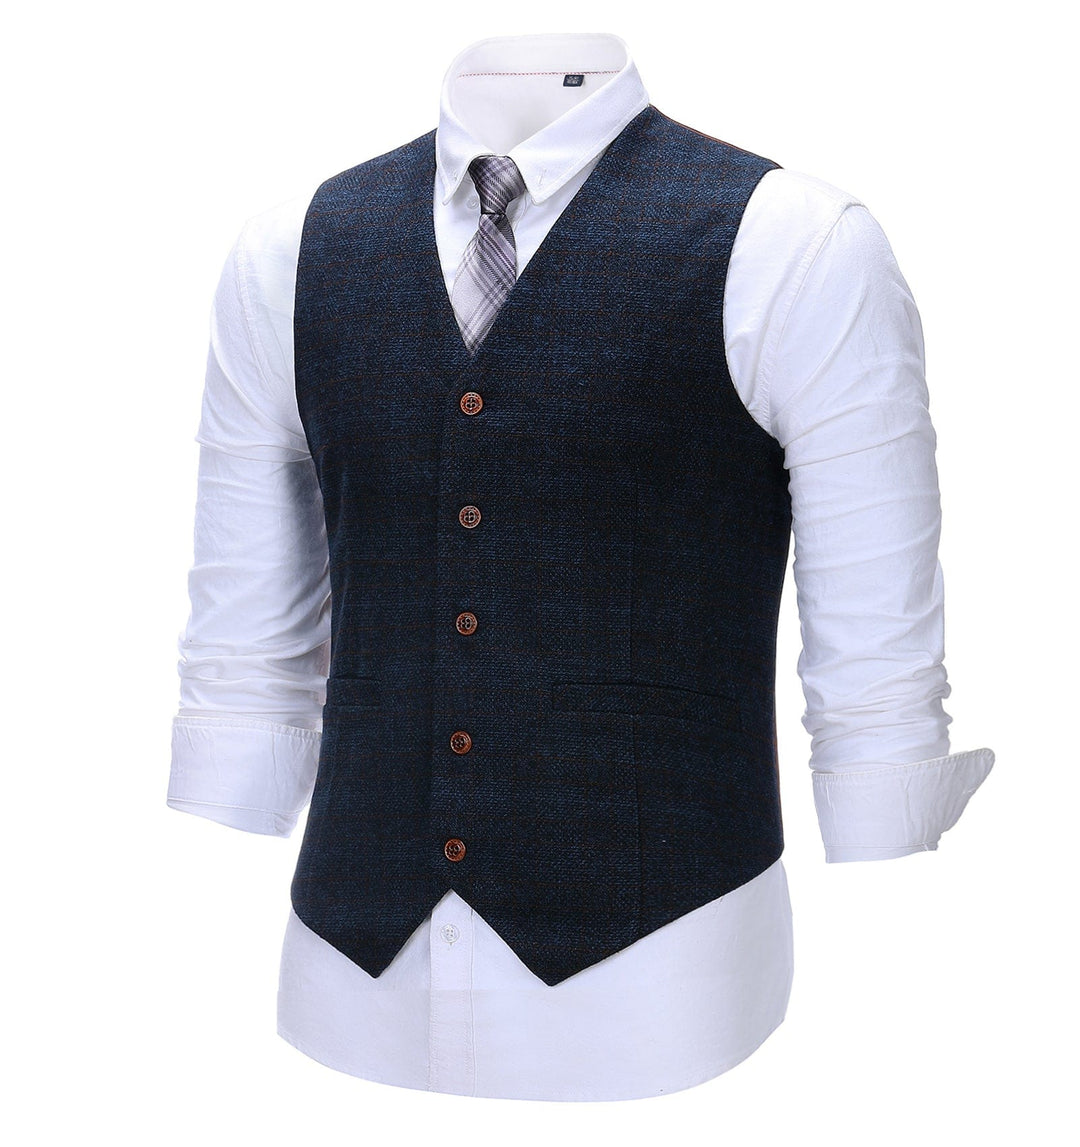 Formal Men's Suit Vest Navy Plaid V Neck Waistcoat mens event wear